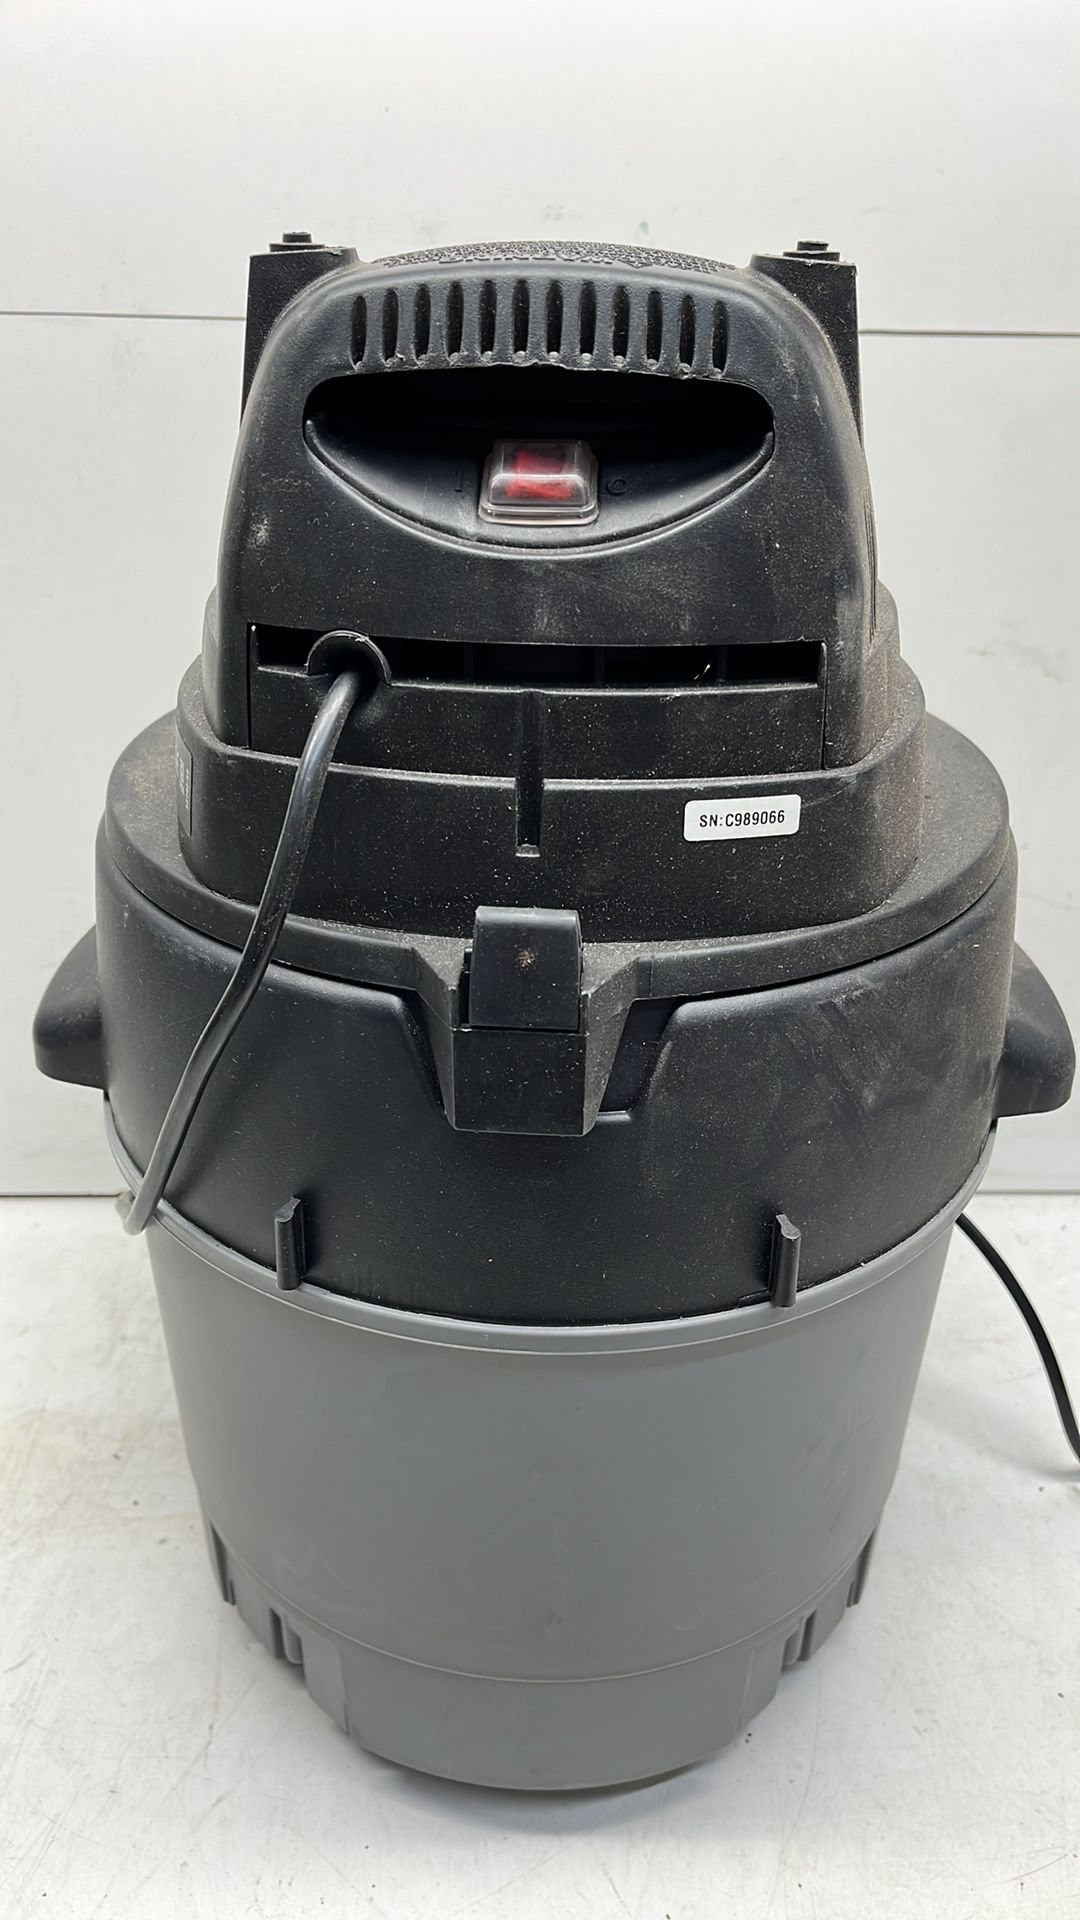 Bush 20 Wet/Dry Vacuum Cleaner - Image 3 of 3